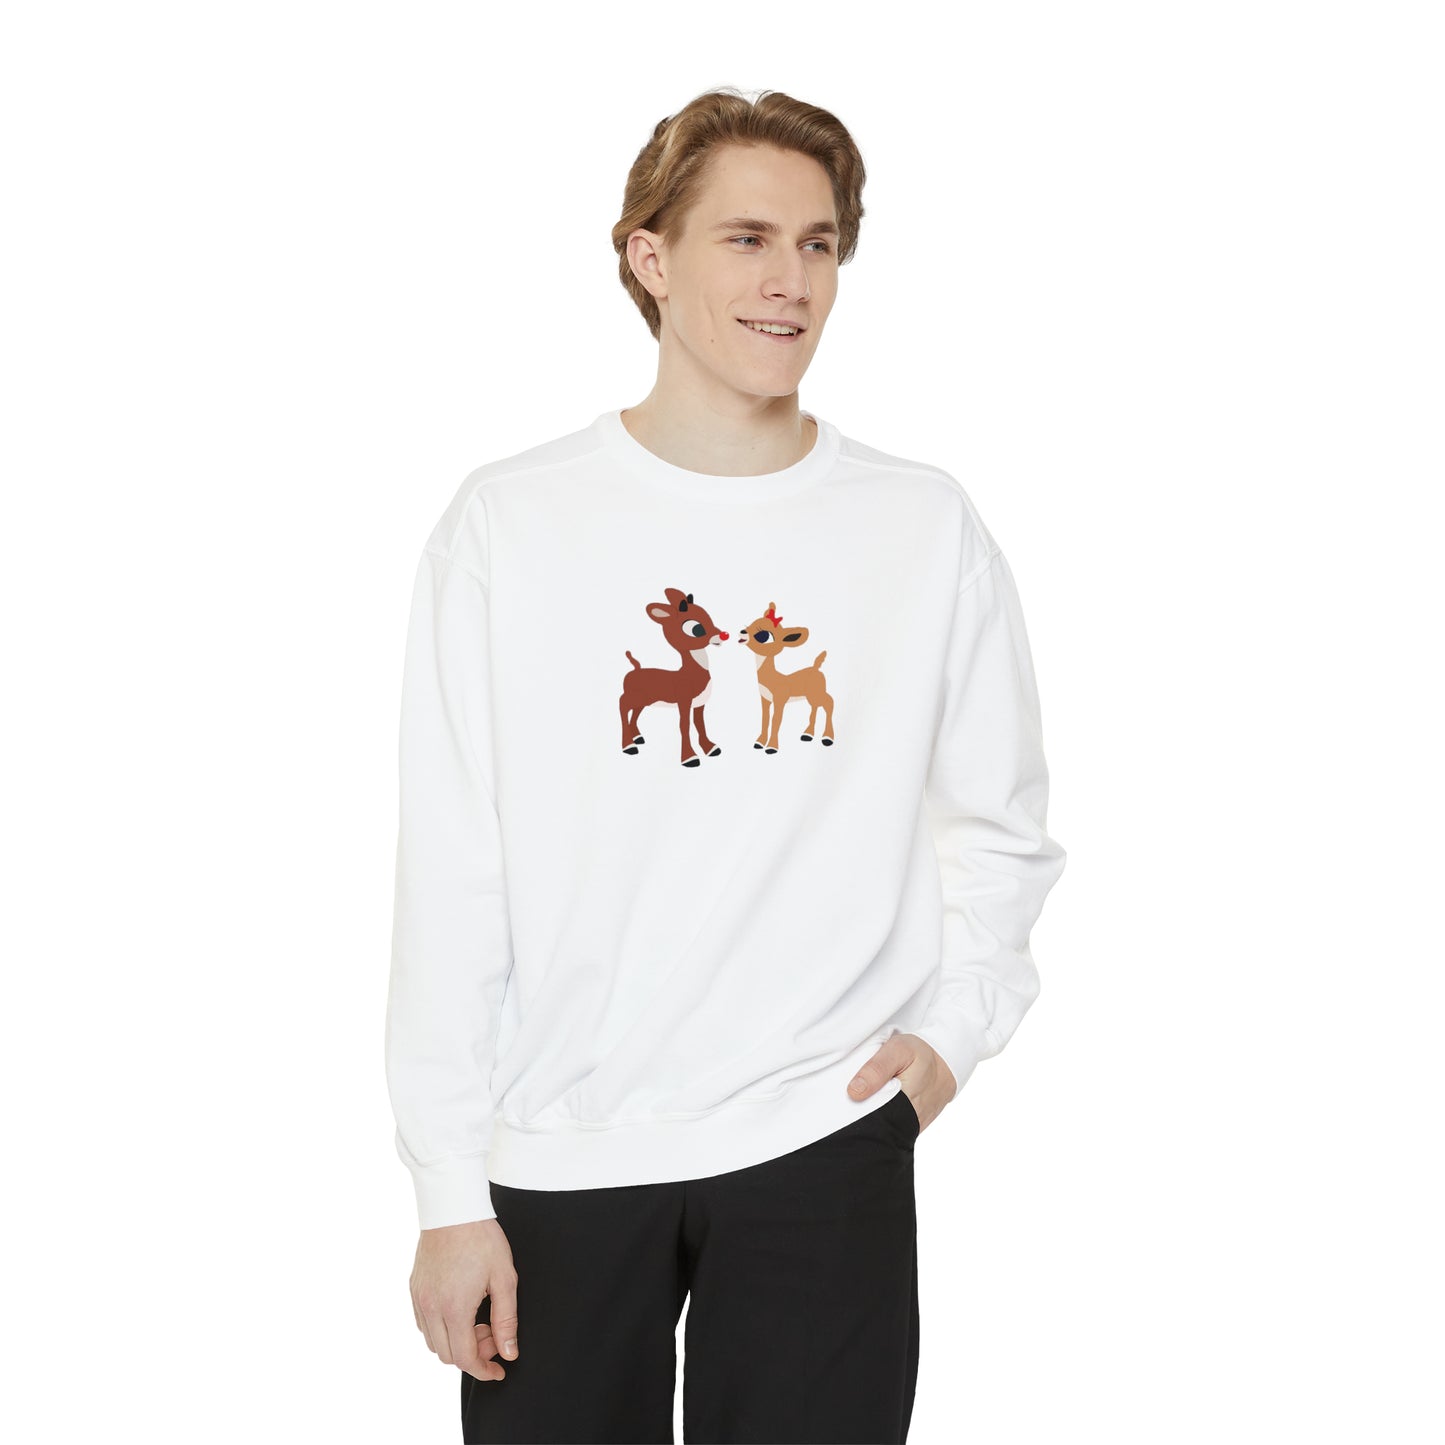 RudolphThe Red Nose Reindeer Unisex Garment-Dyed Sweatshirt